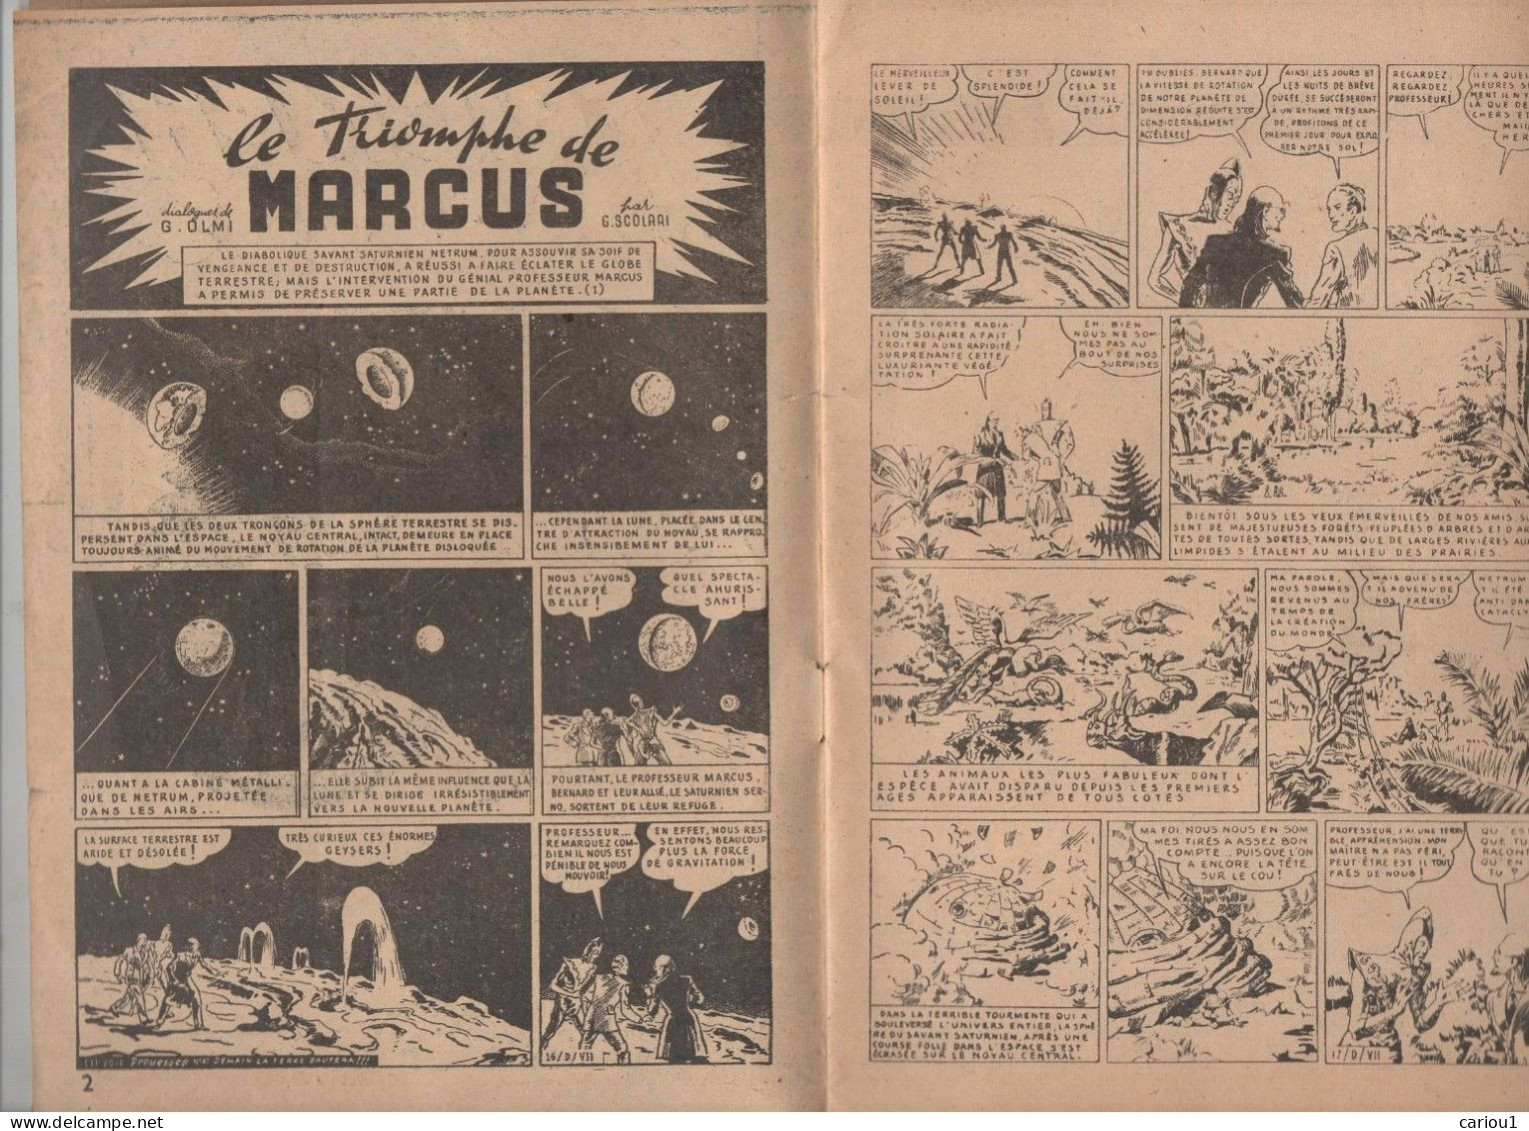 C1 SCOLARI Triomphe Marcus SELECTIONS PROUESSES # 2 1948 Saturne Contre Terre SF Port Inclus France - Editions Originales (langue Française)